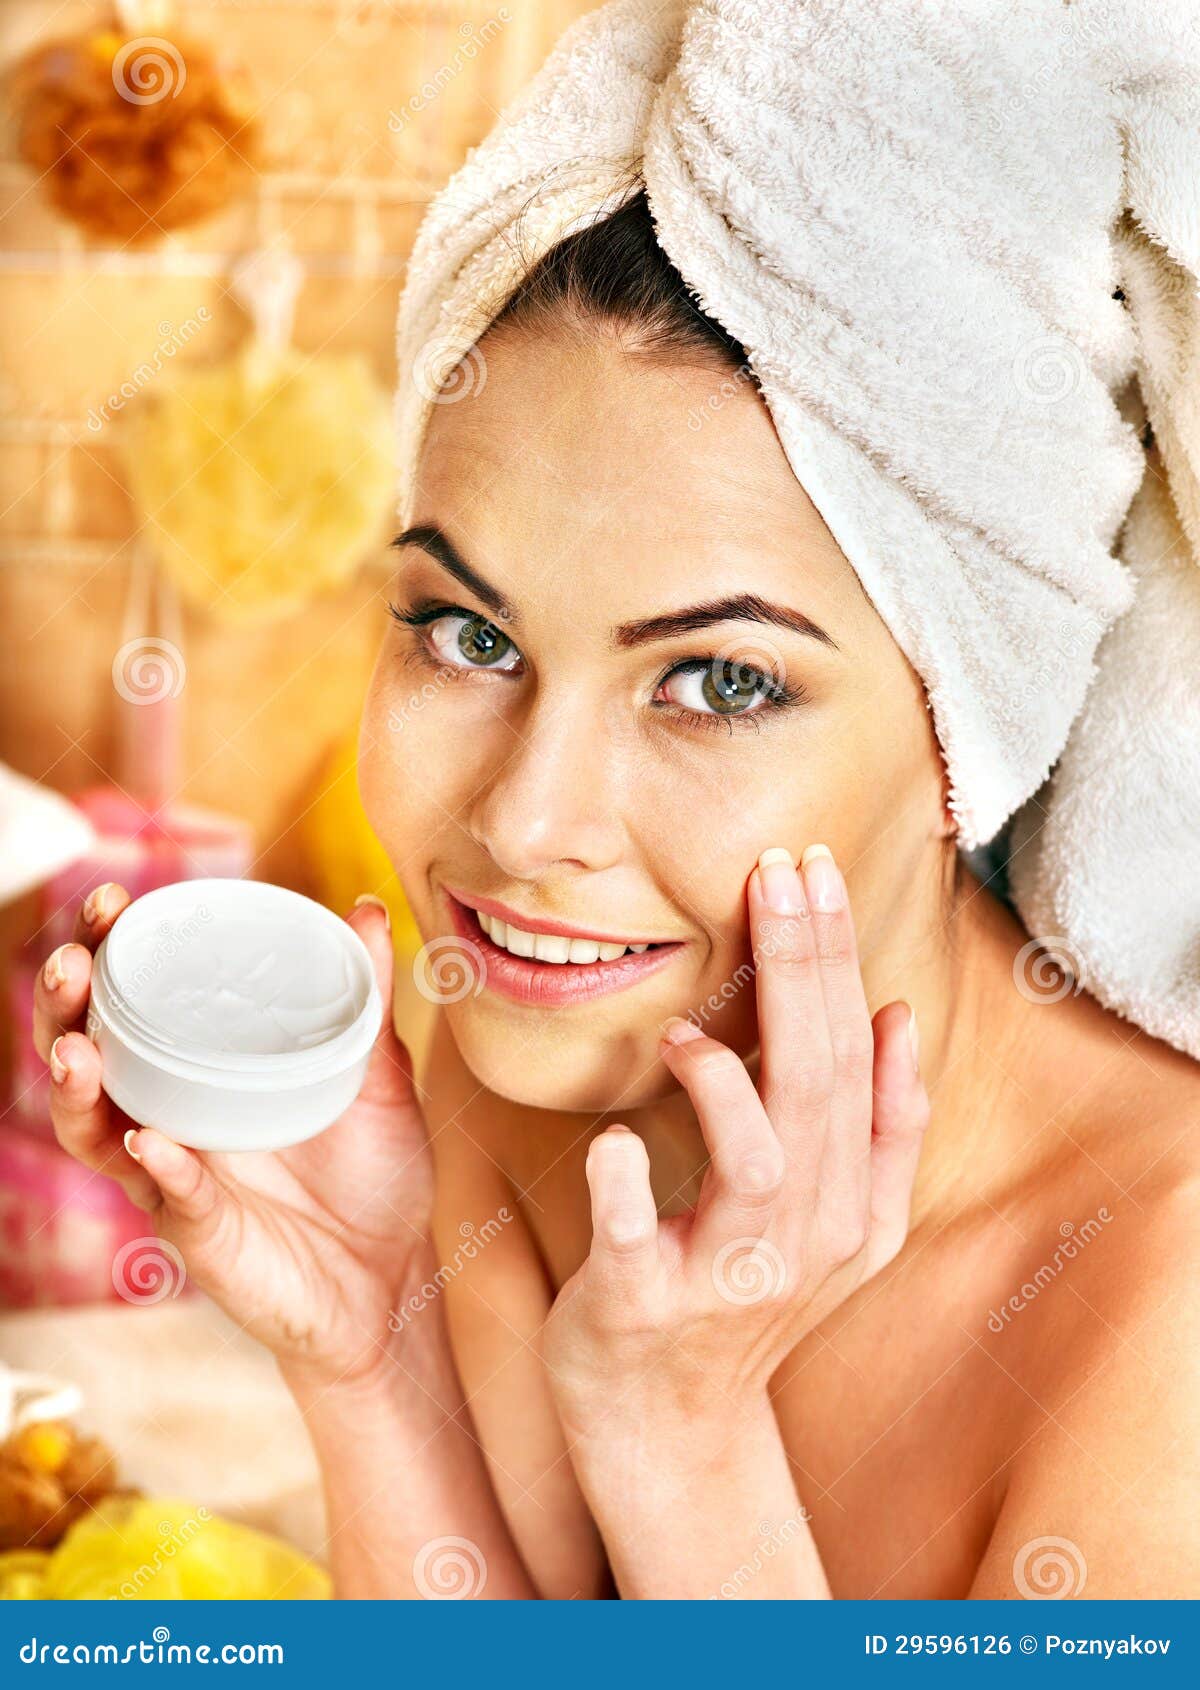 woman applying moisturizer.